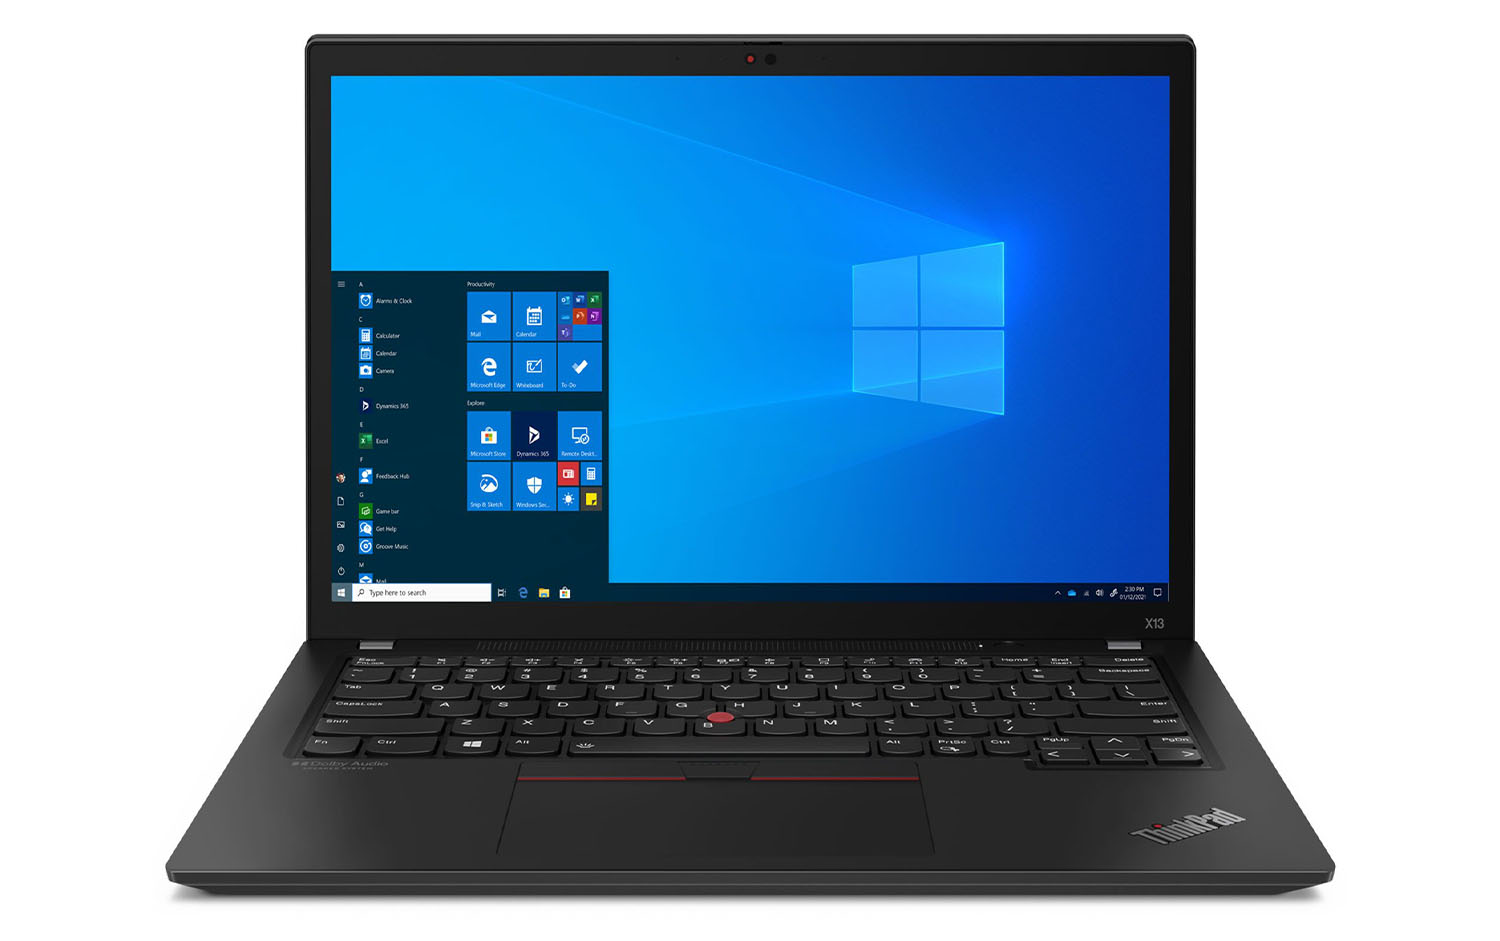 Lenovo ThinkPad X13 Gen 2 AMD Ryzen 5 Pro 8GB RAM 256GB SSD Touchscreen Windows 10 Pro